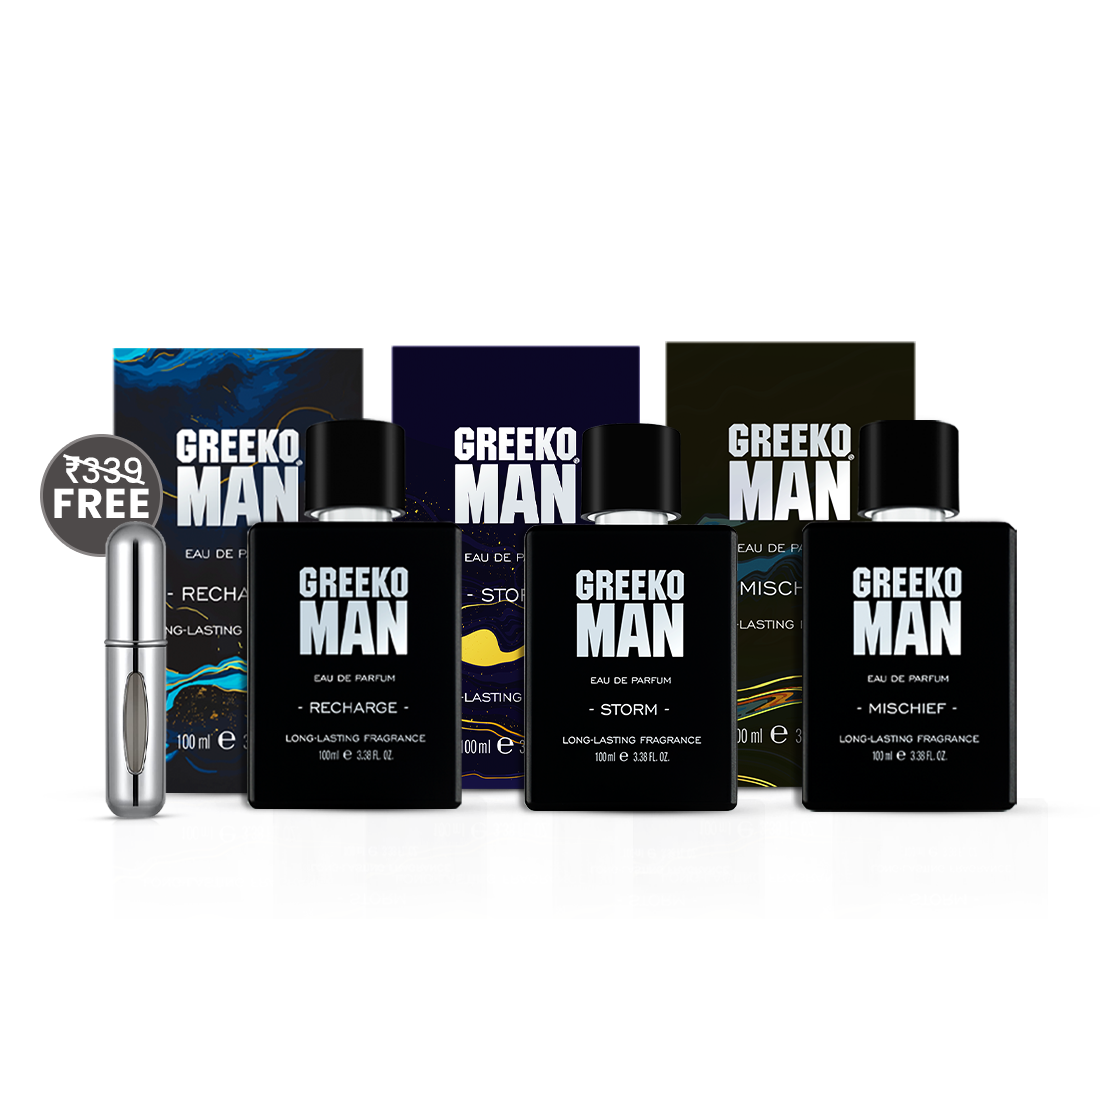 Greeko Man Perfume Combo (Pack of 3) For Men - Luxurious Premium Perfume For Long Lasting Fragrance - No Gas Fragrance - Eau De Parfum